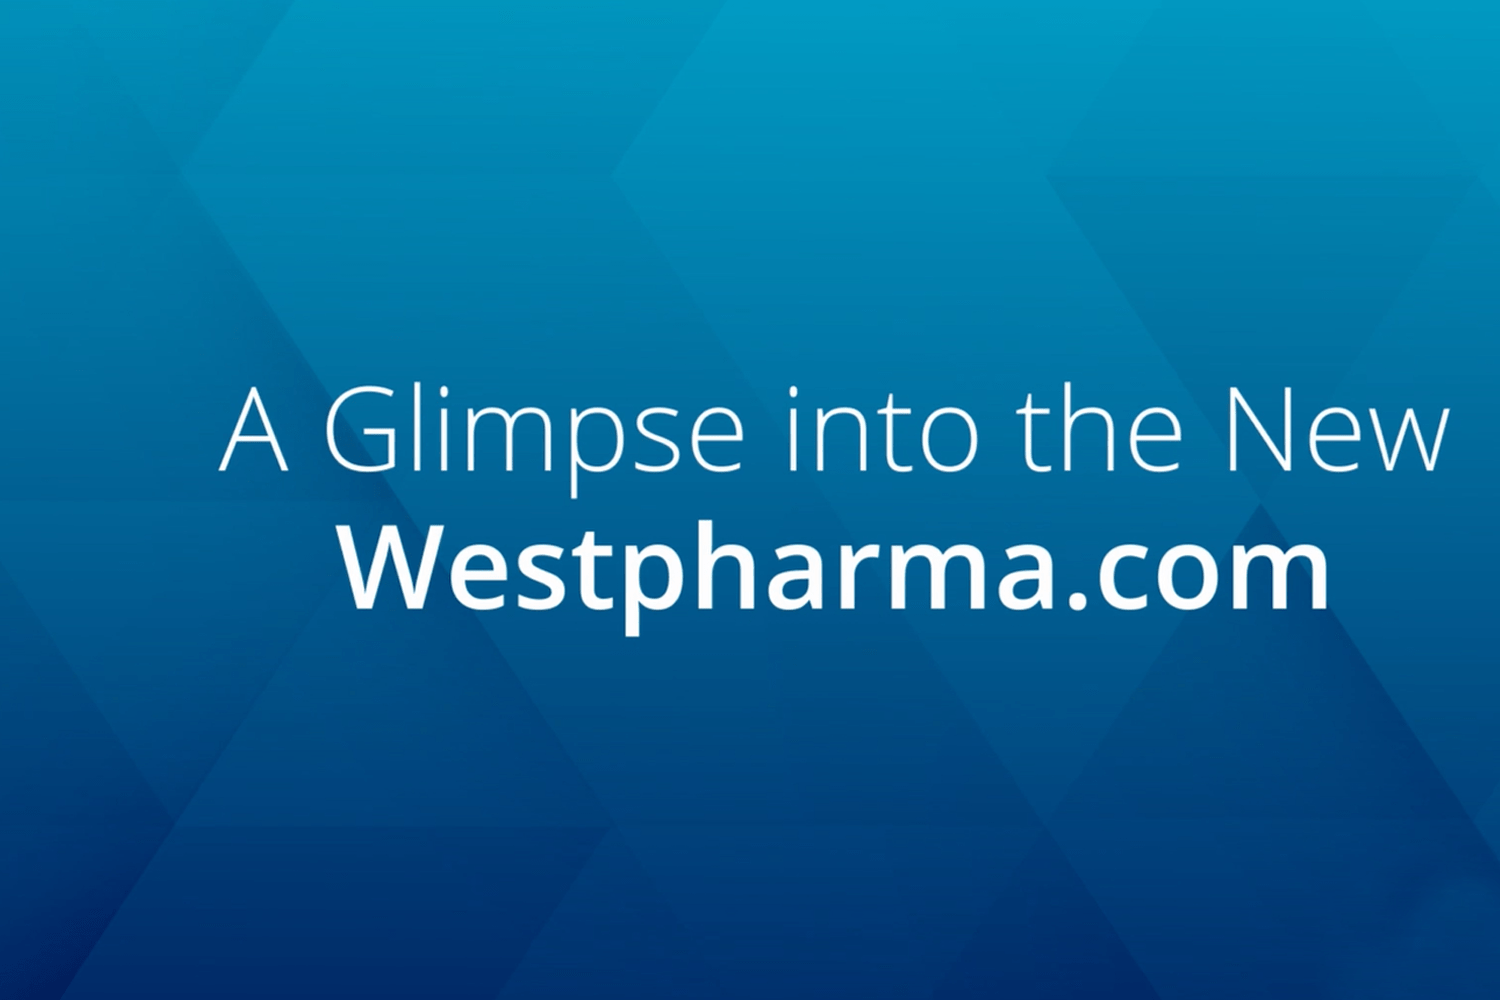 A Glimpse into the New Westpharma.com